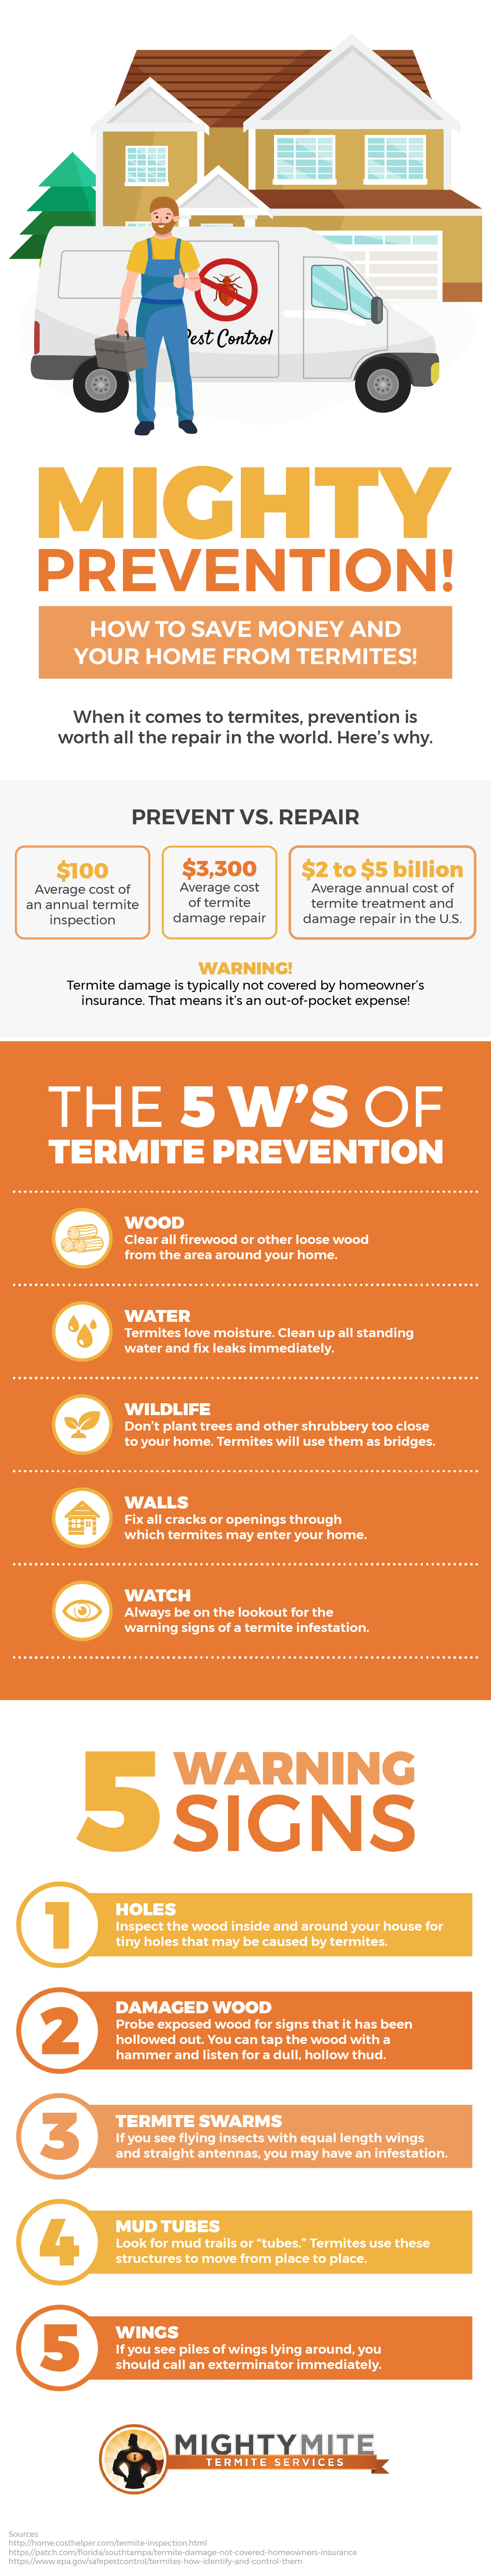 infographic mightymite termite services